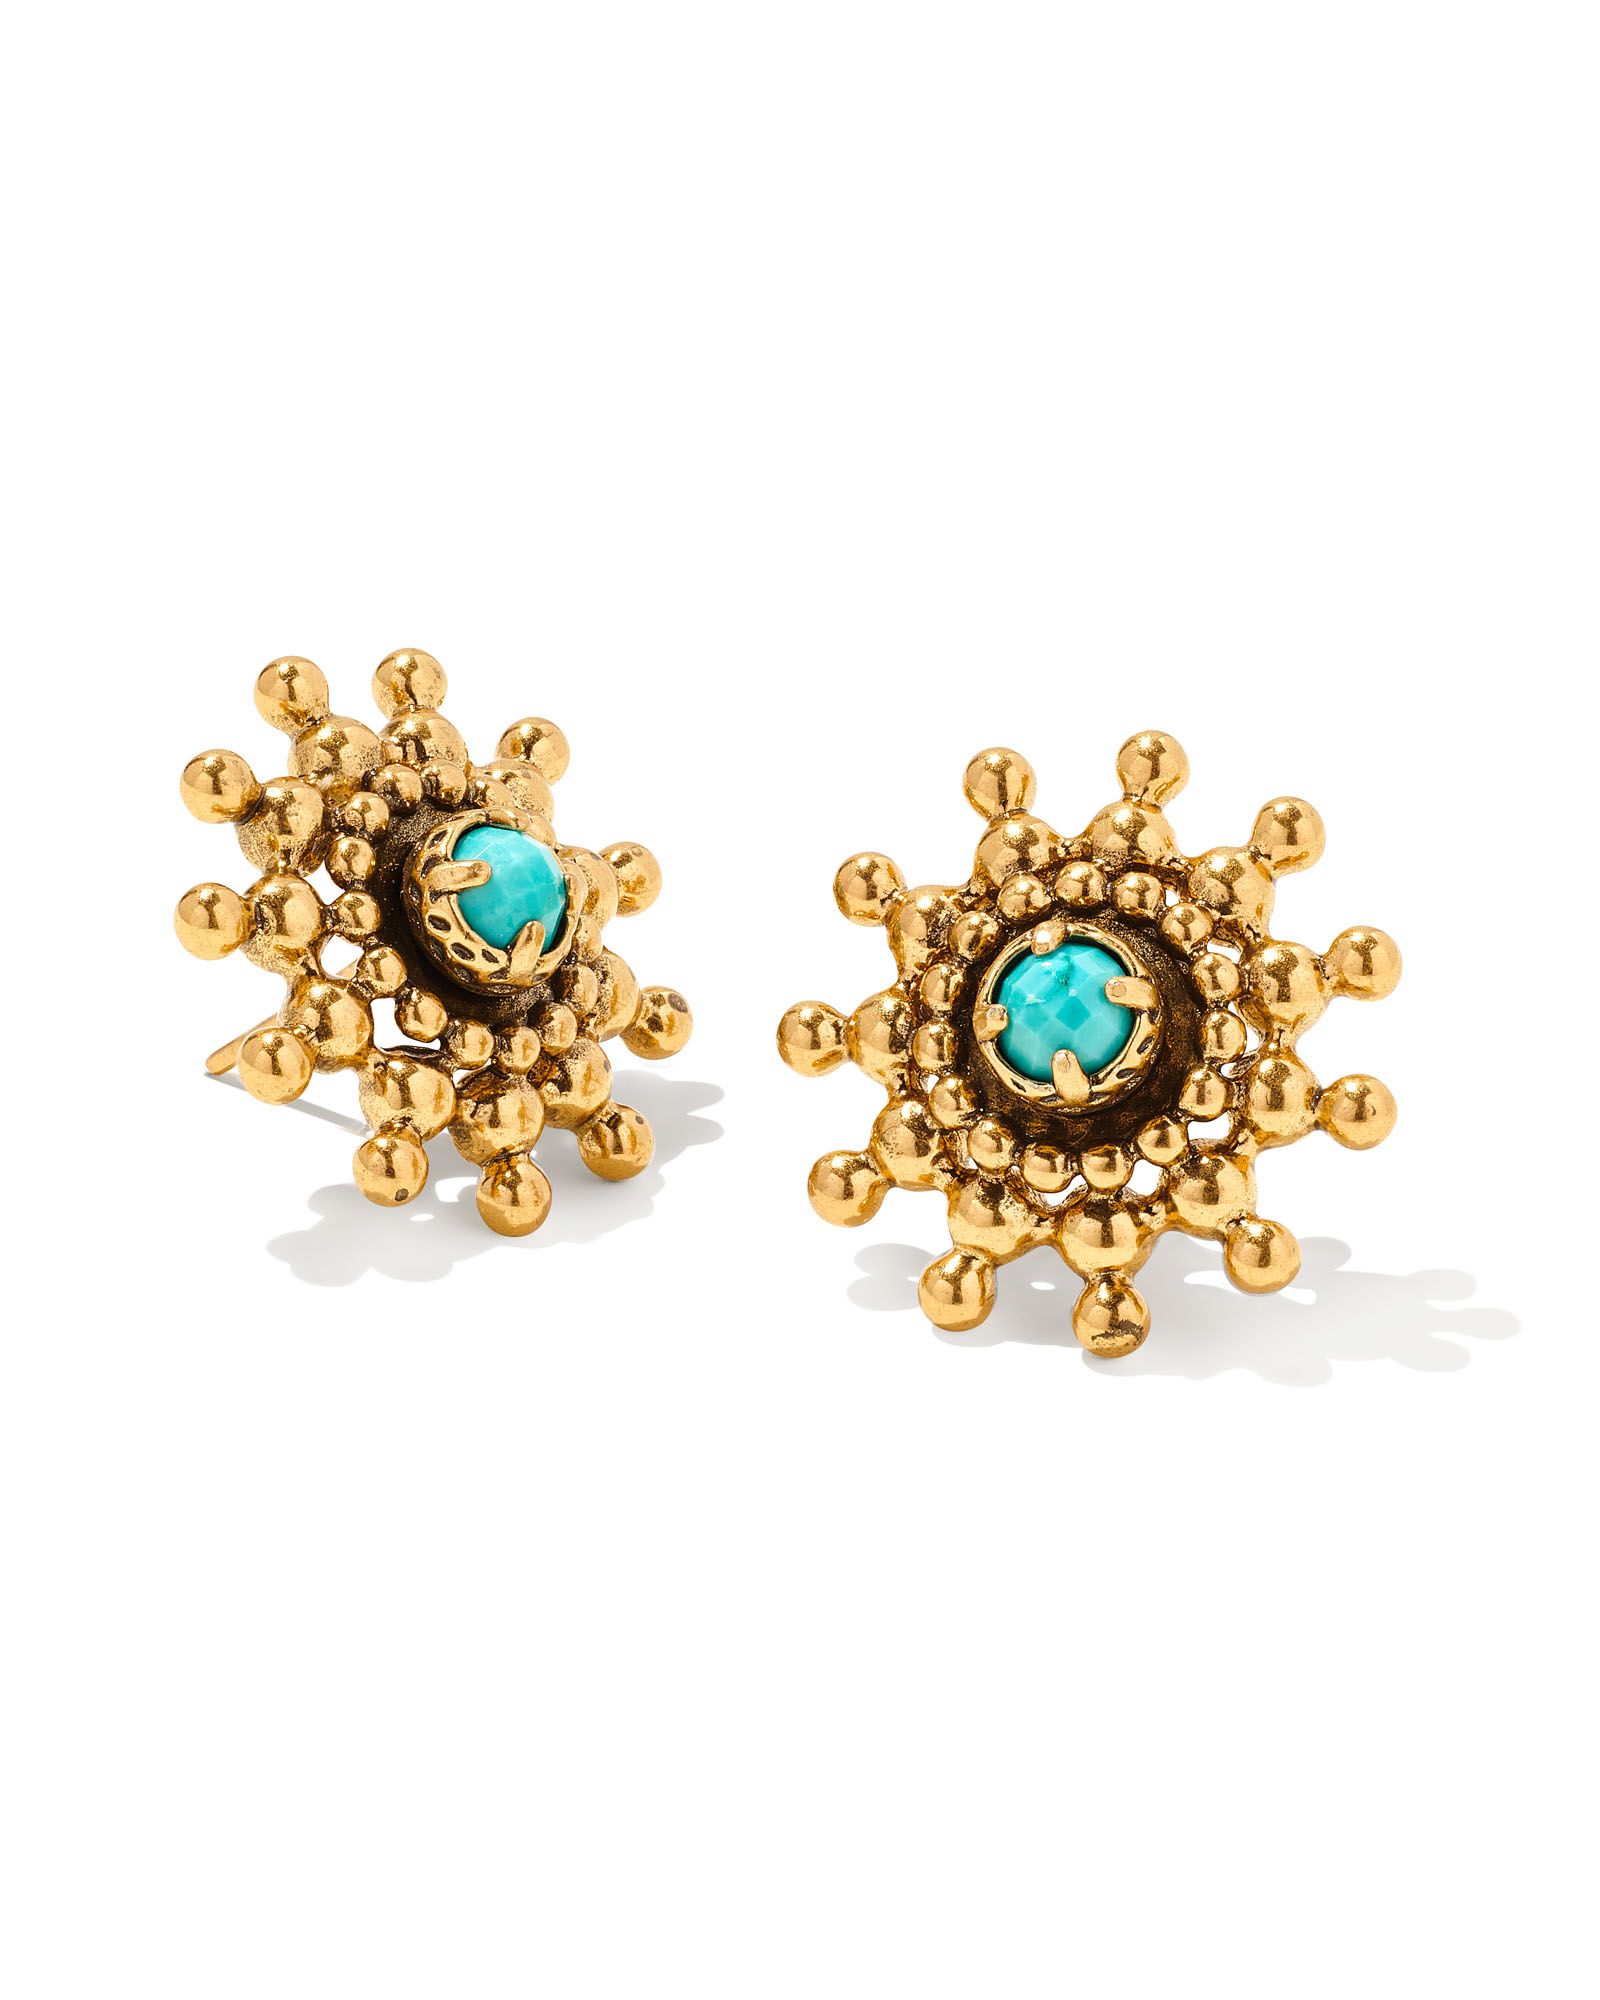 Dryden Vintage Gold Stud Earrings in Variegated Turquoise Magnesite | Kendra Scott | Kendra Scott